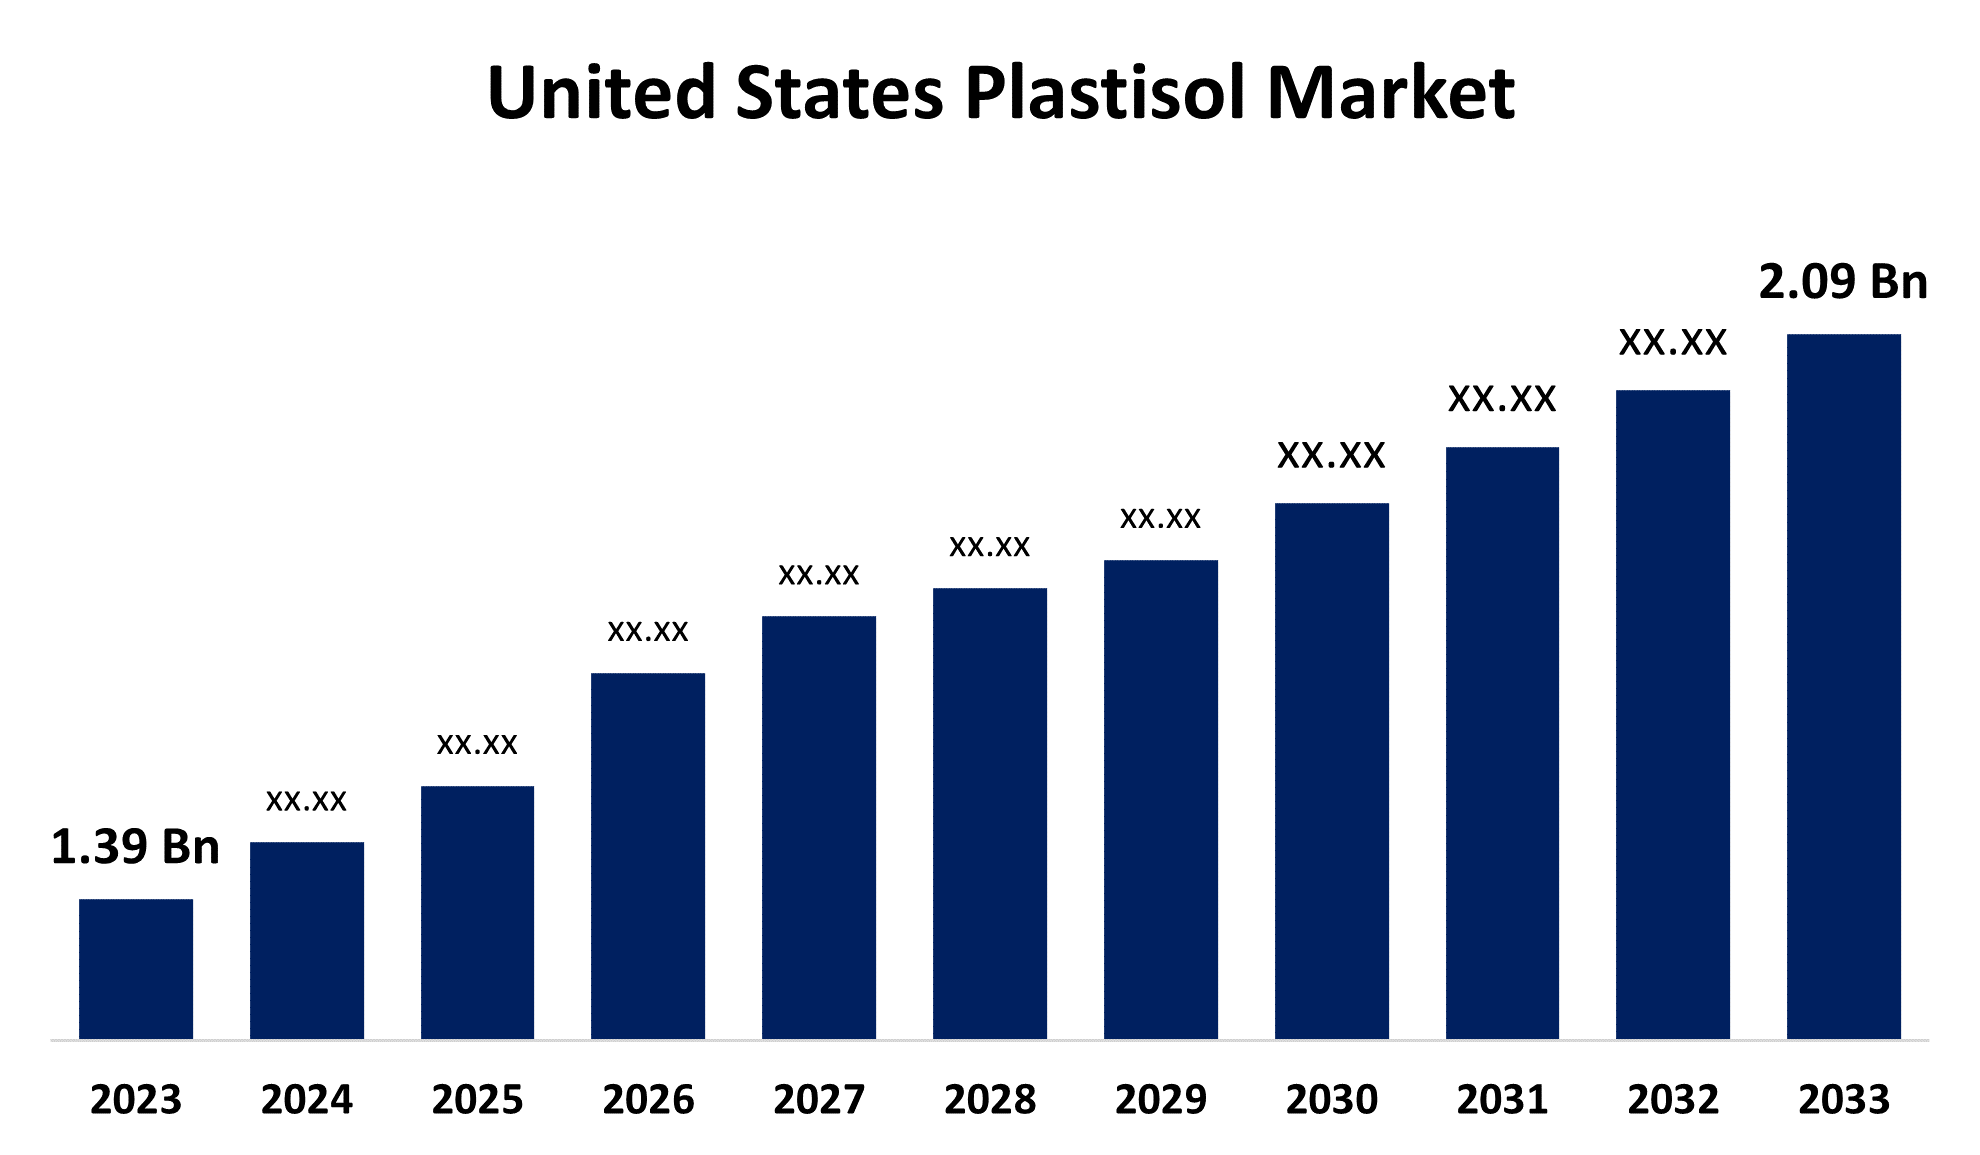 United States Plastisol Market